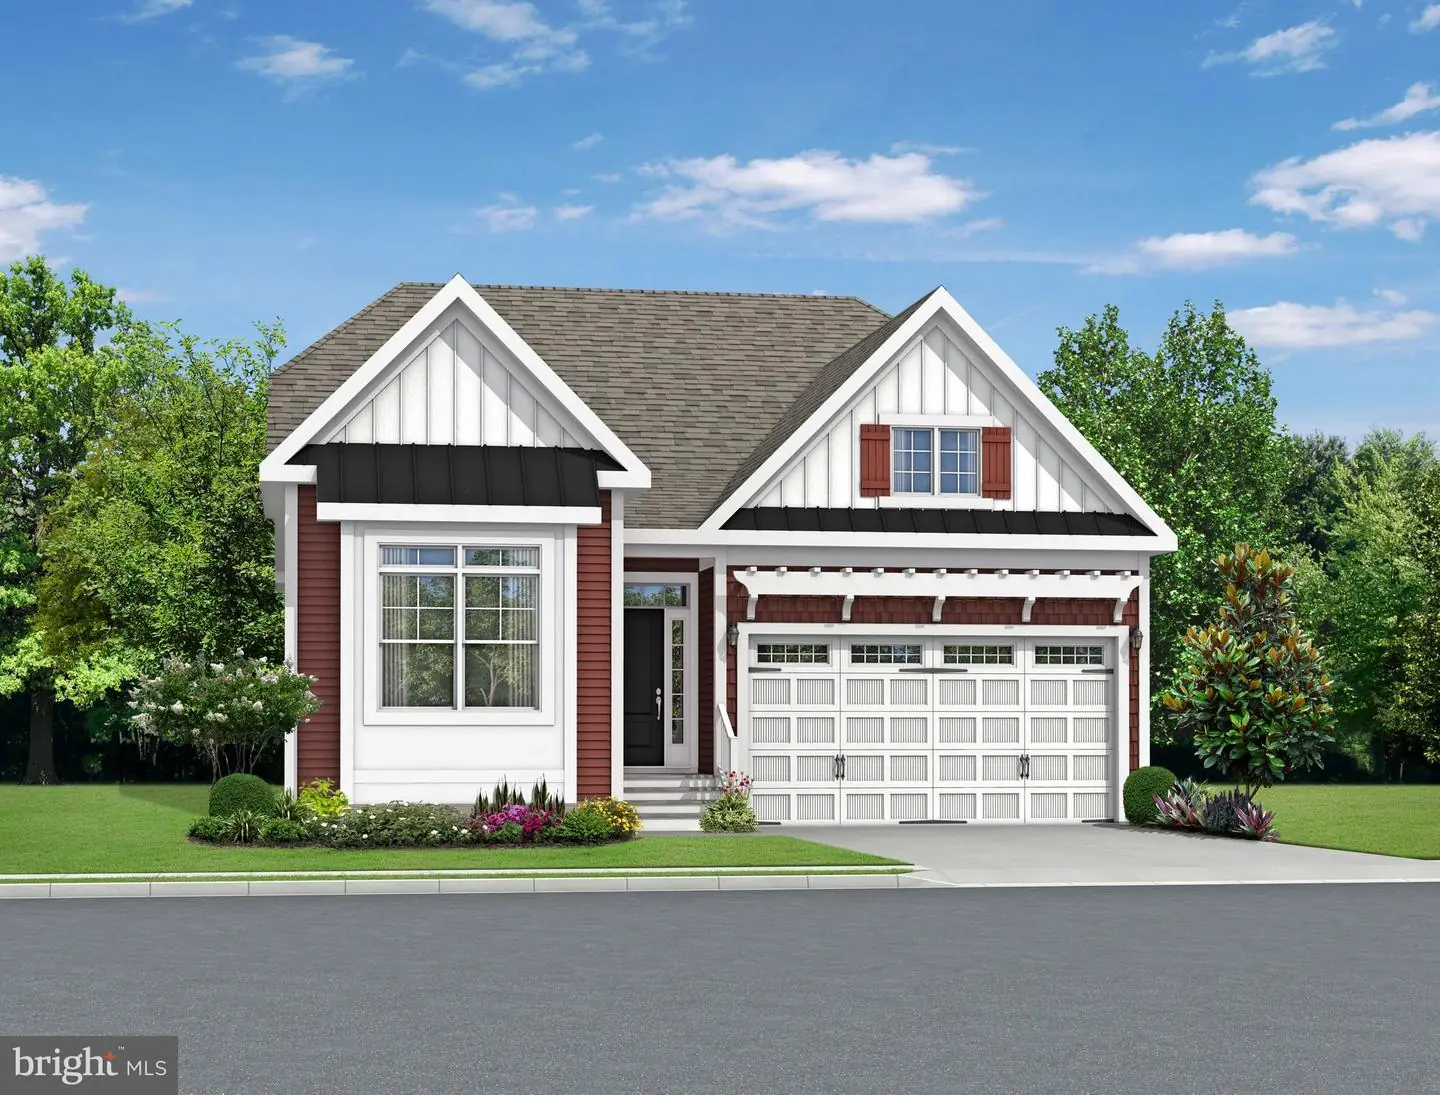 DESU2031076-801956180416-2024-01-30-16-56-09 Bluebell To-be-built Home Tbd | Millsboro, DE Real Estate For Sale | MLS# Desu2031076  - David T. King Realtor